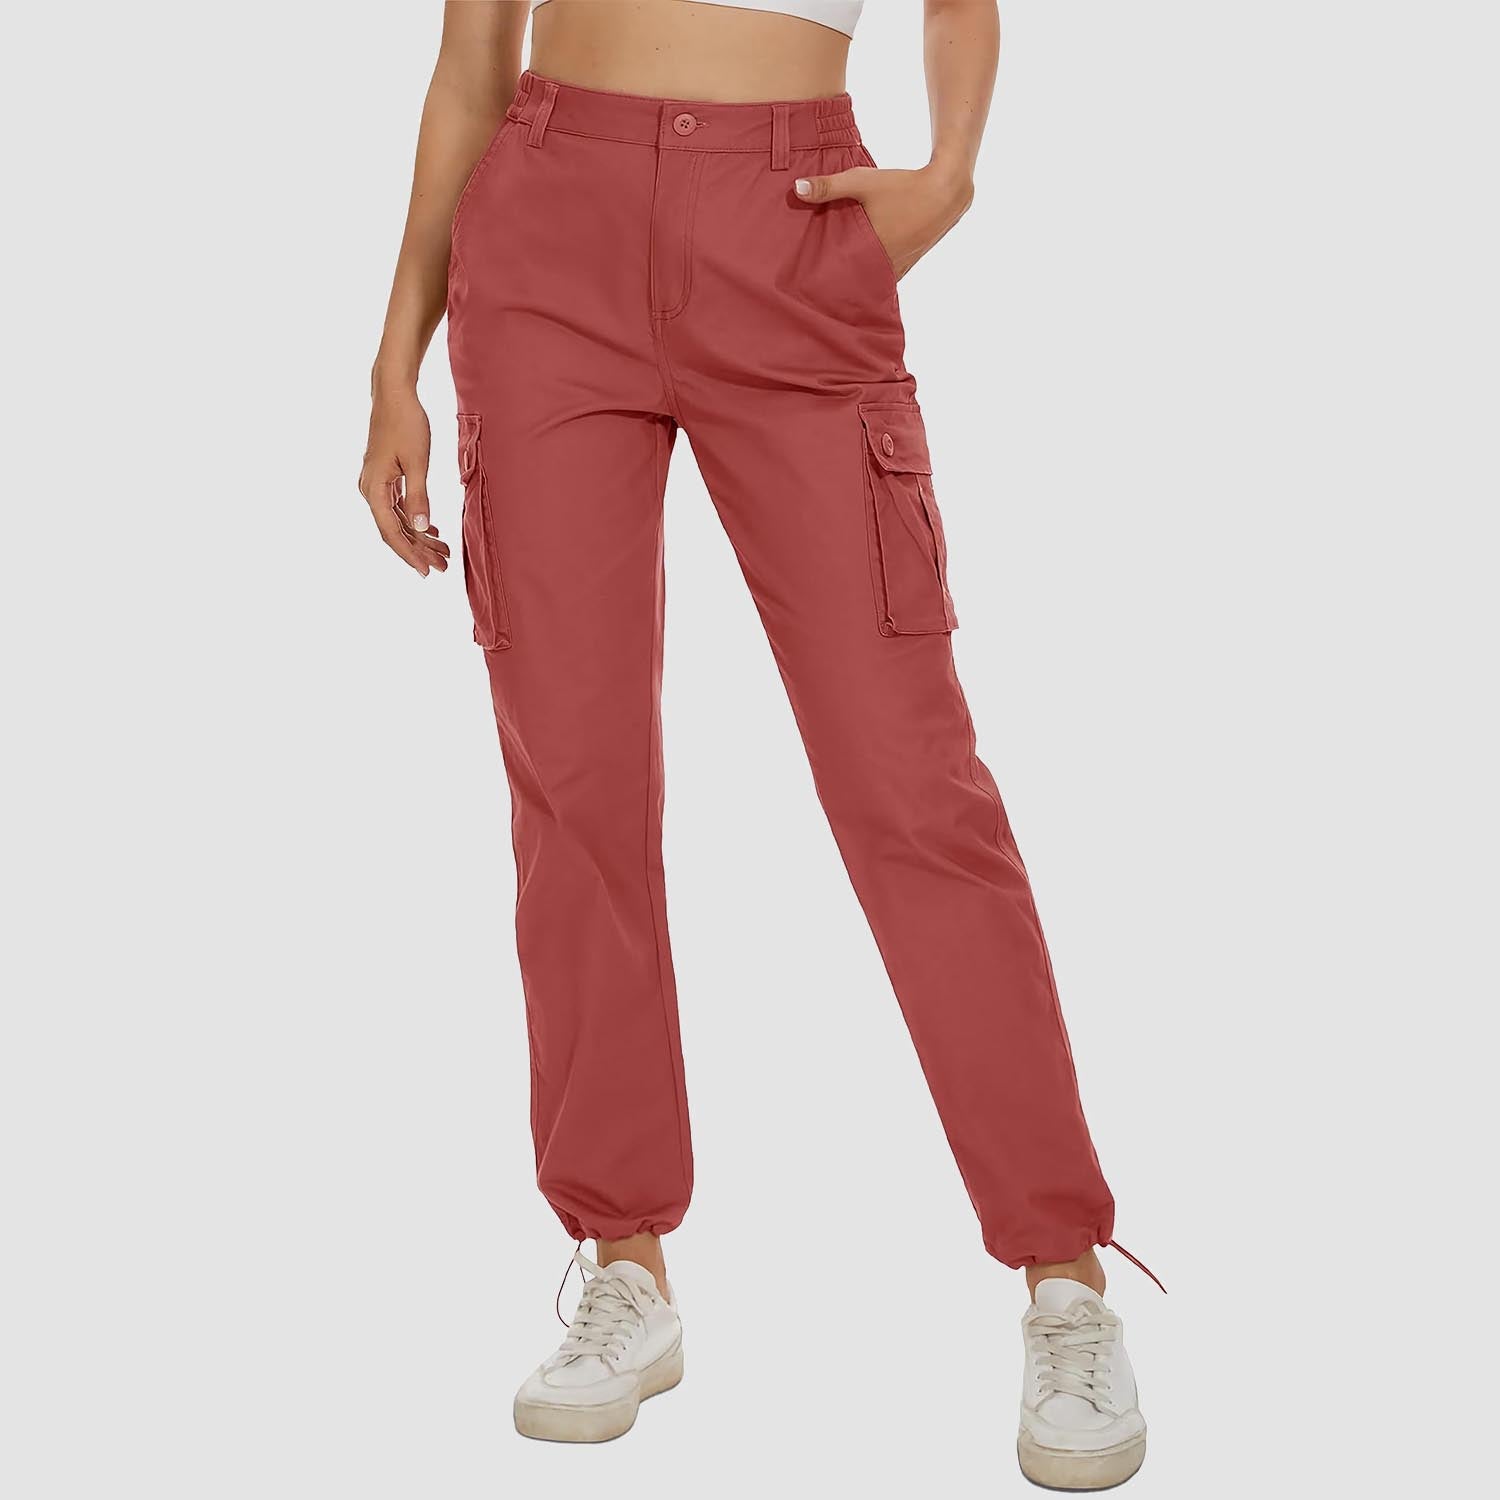 Women's Cargo Pants Cotton Work Pants Casual Stylish Elastic